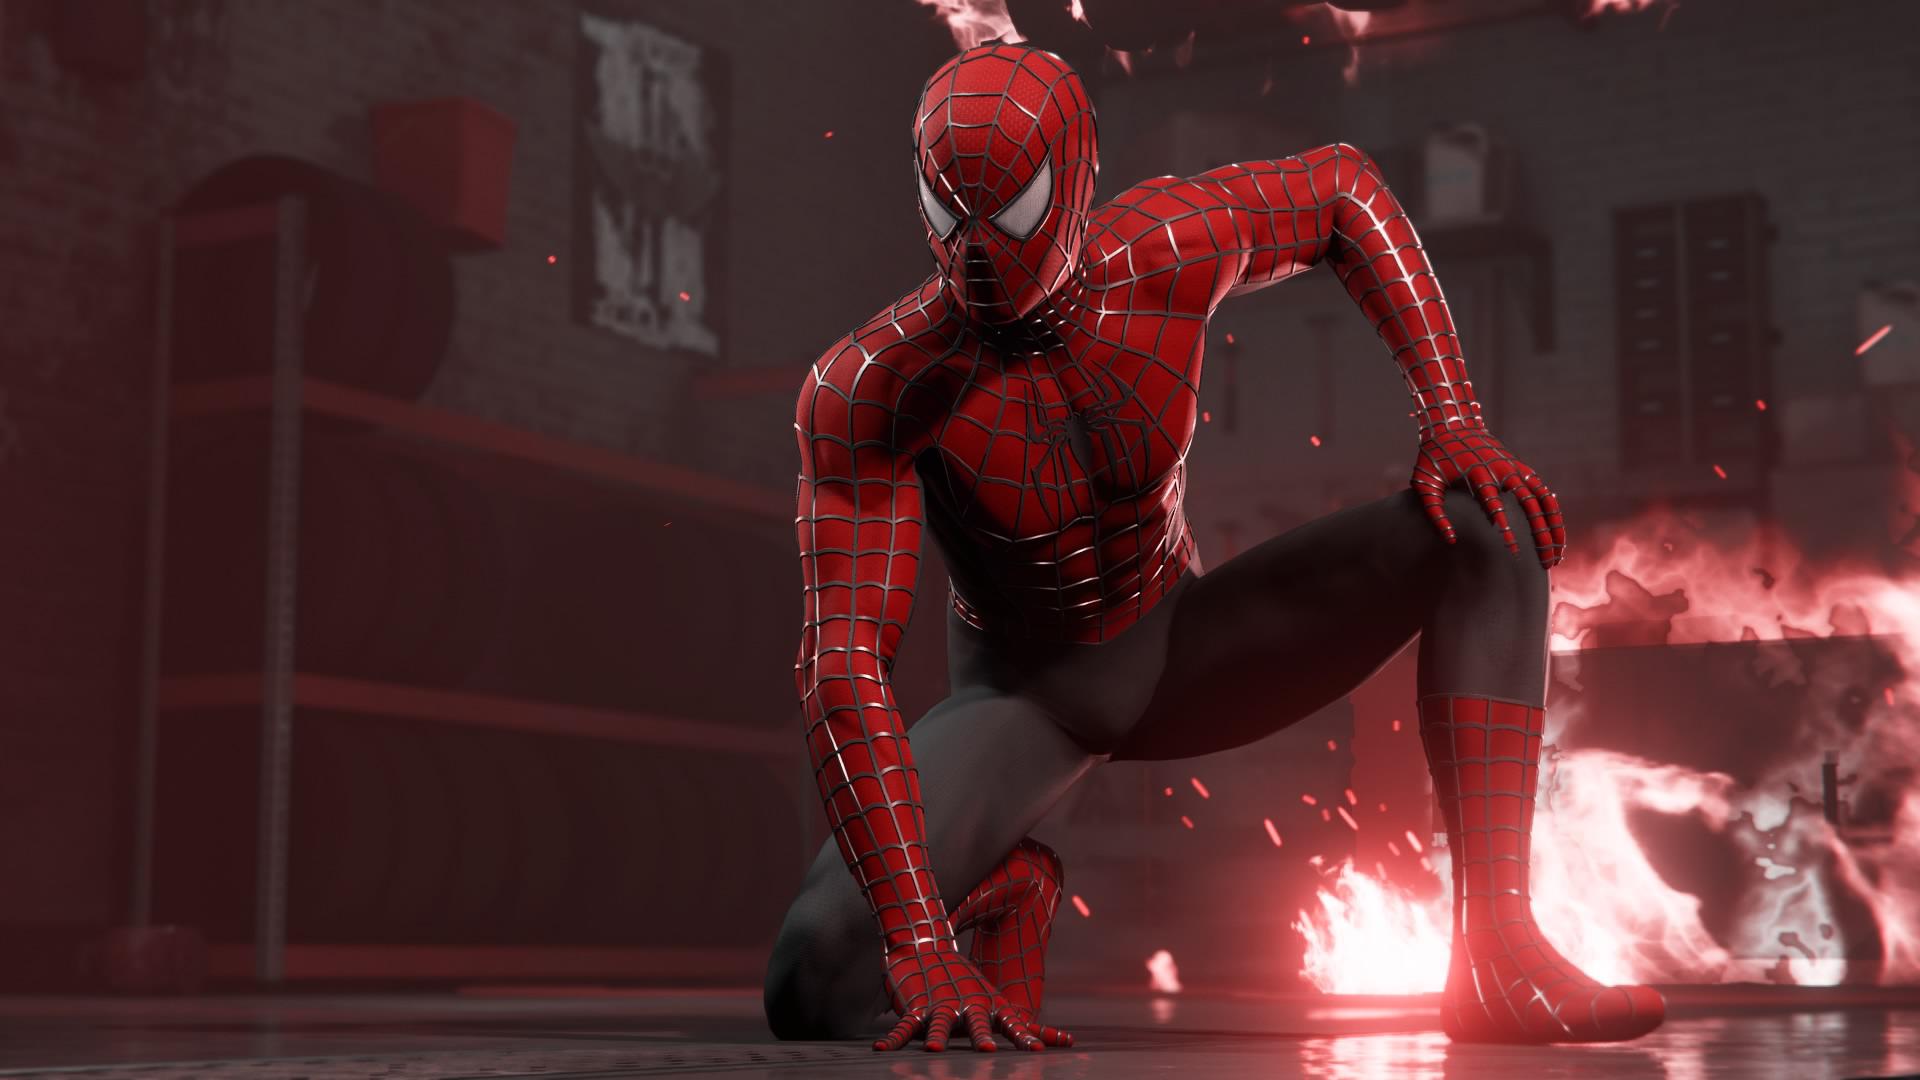 Sam Raimi Suit! Looks so good in this game.: SpidermanPS4